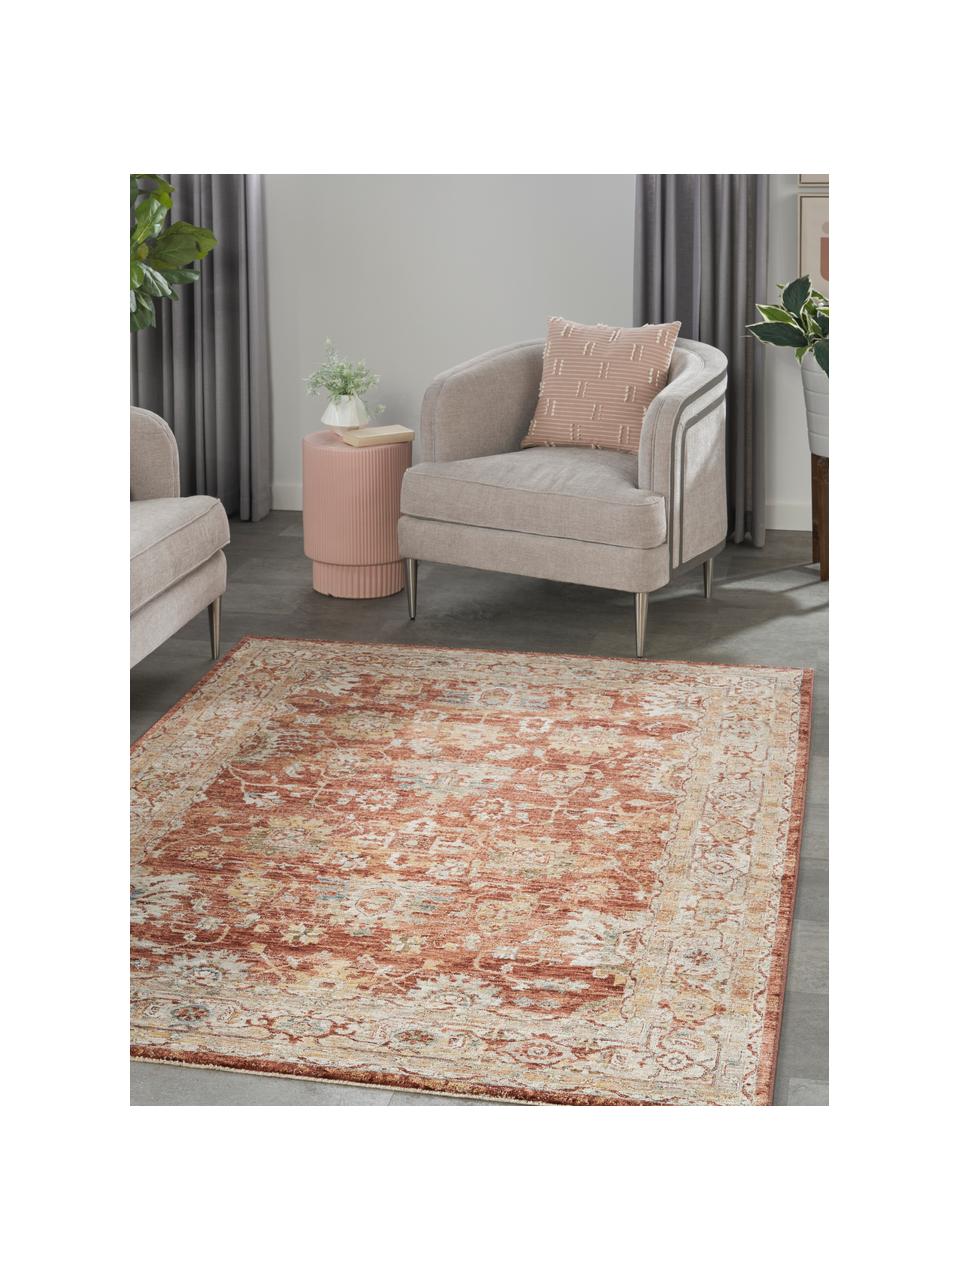 Kurzflor-Teppich Sahar mit Ornamentmuster, 100 % Polyester, Rottöne, Gelbtöne, Beigetöne, B 120 x L 180 cm (Größe S)